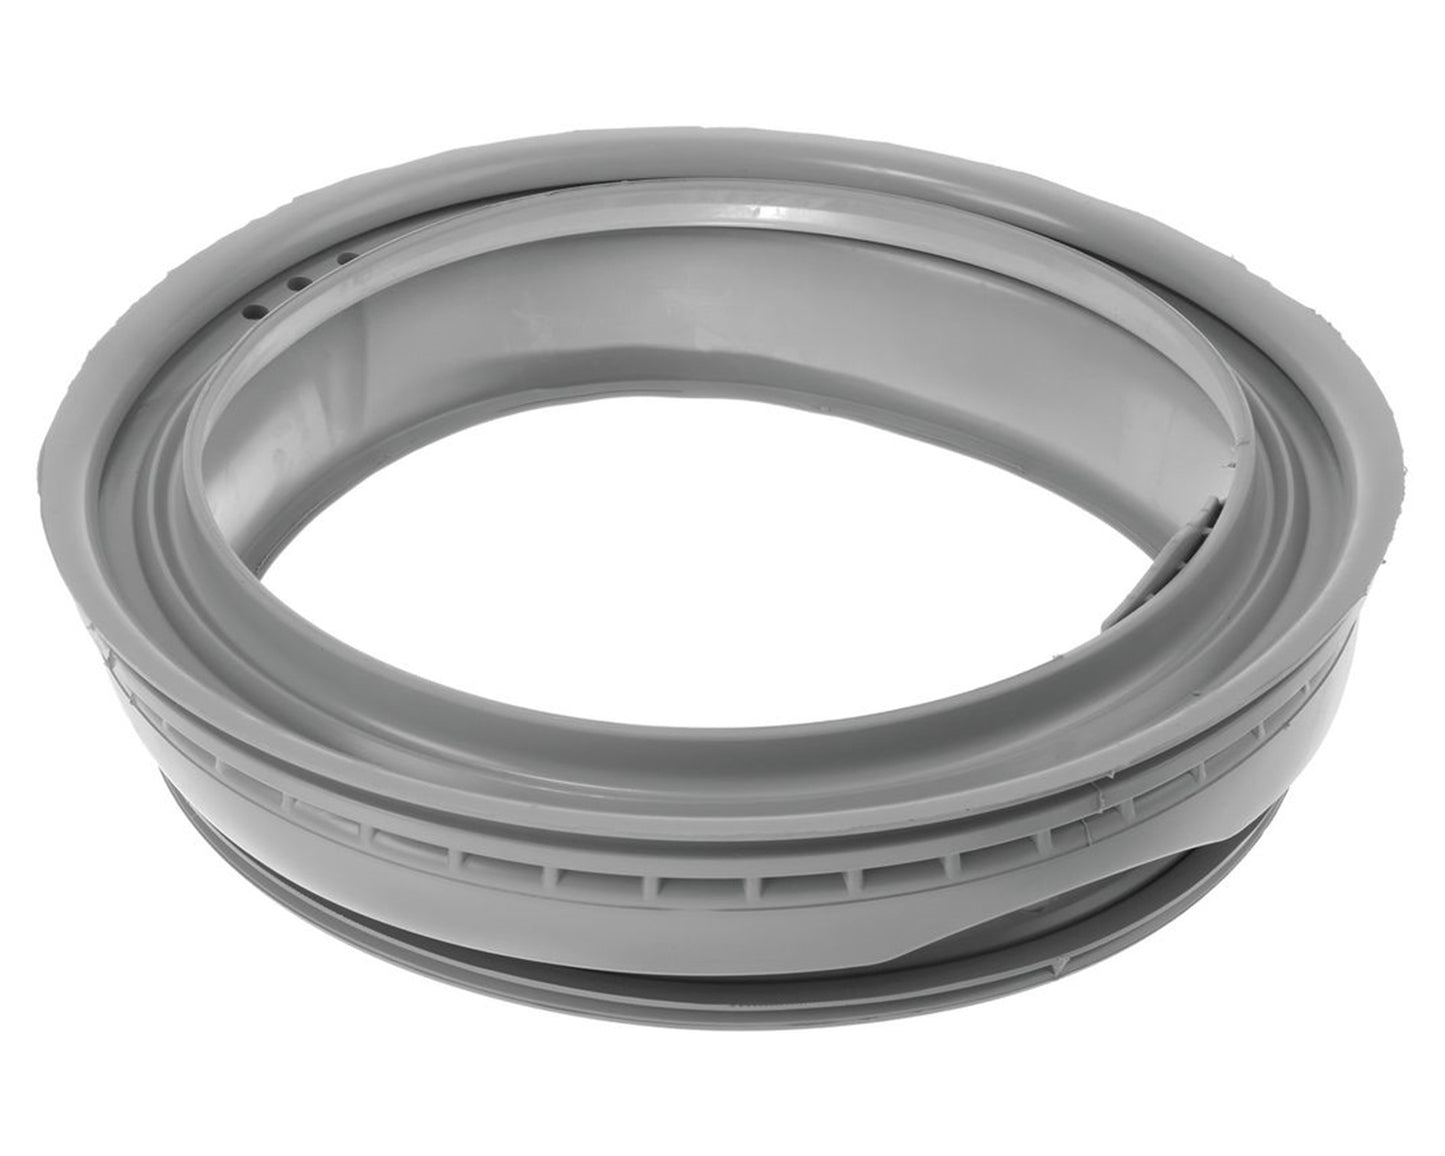 Washing Machine Rubber Door Gasket Seal for Neff W5320X0GB/05 W5320X0GB - 00362254